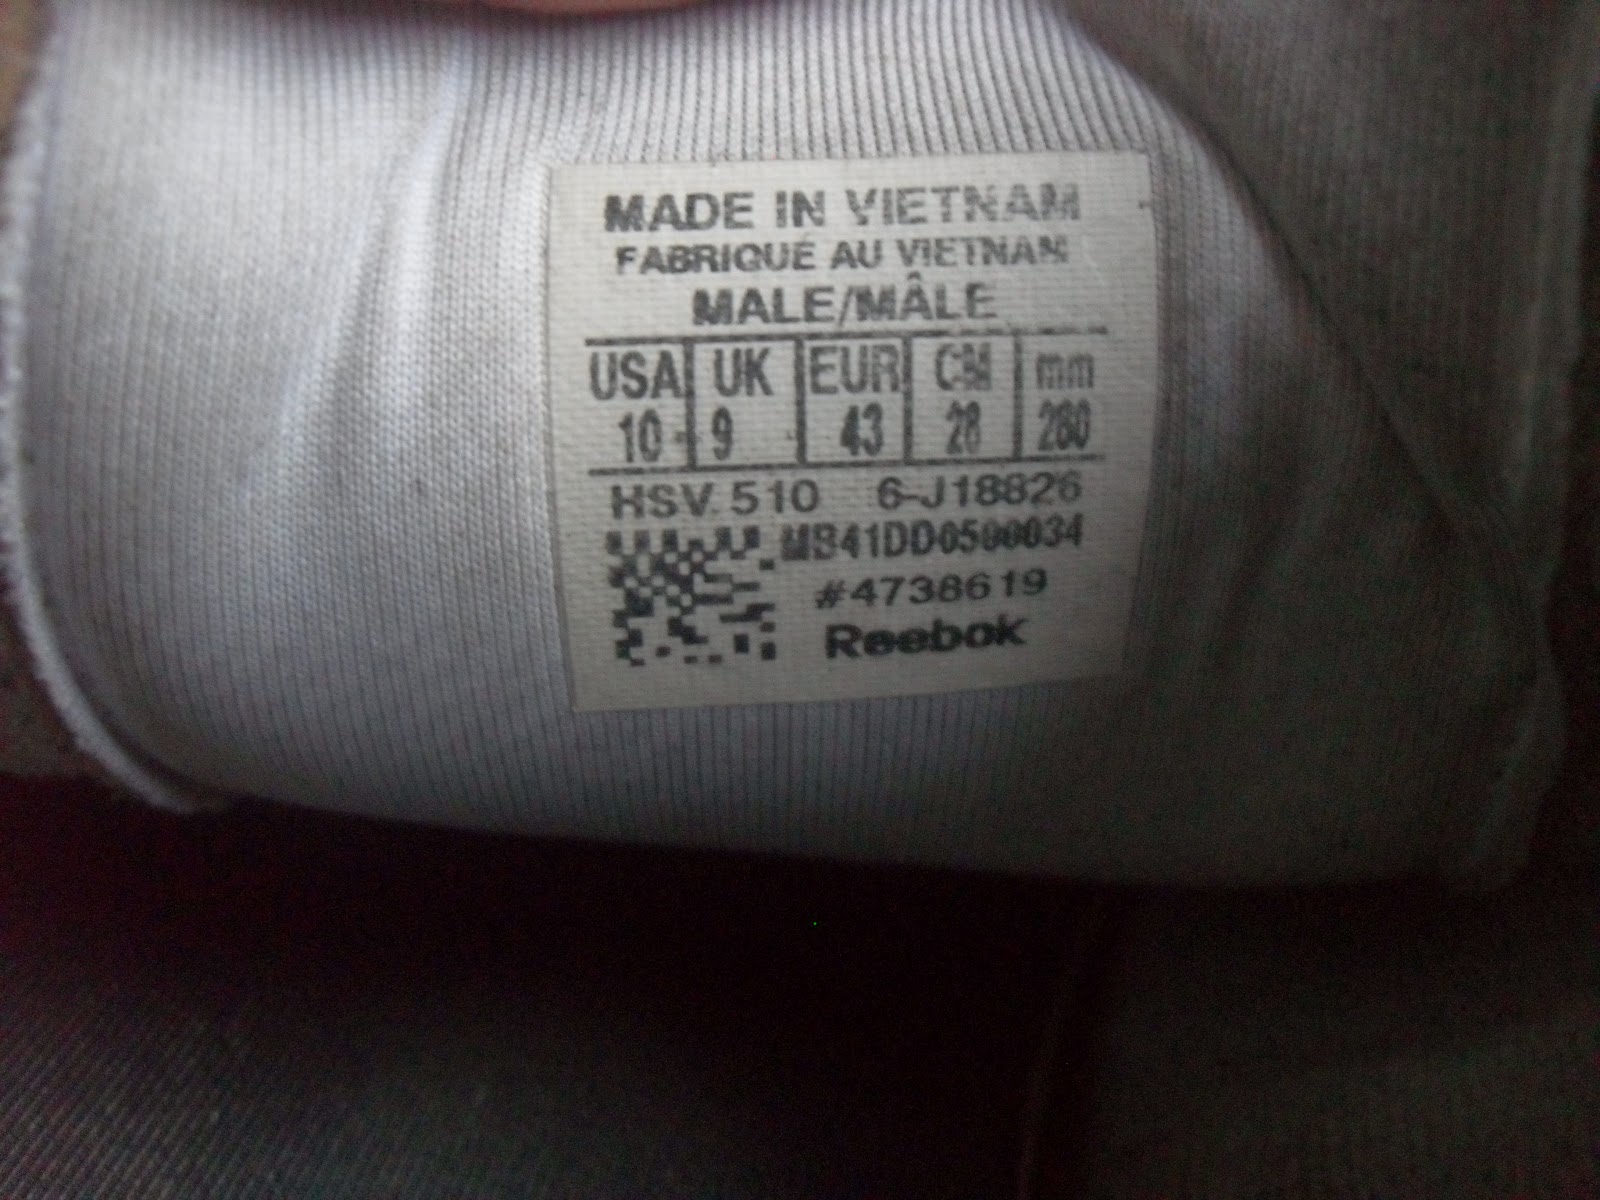 reebok shoes made in vietnam price